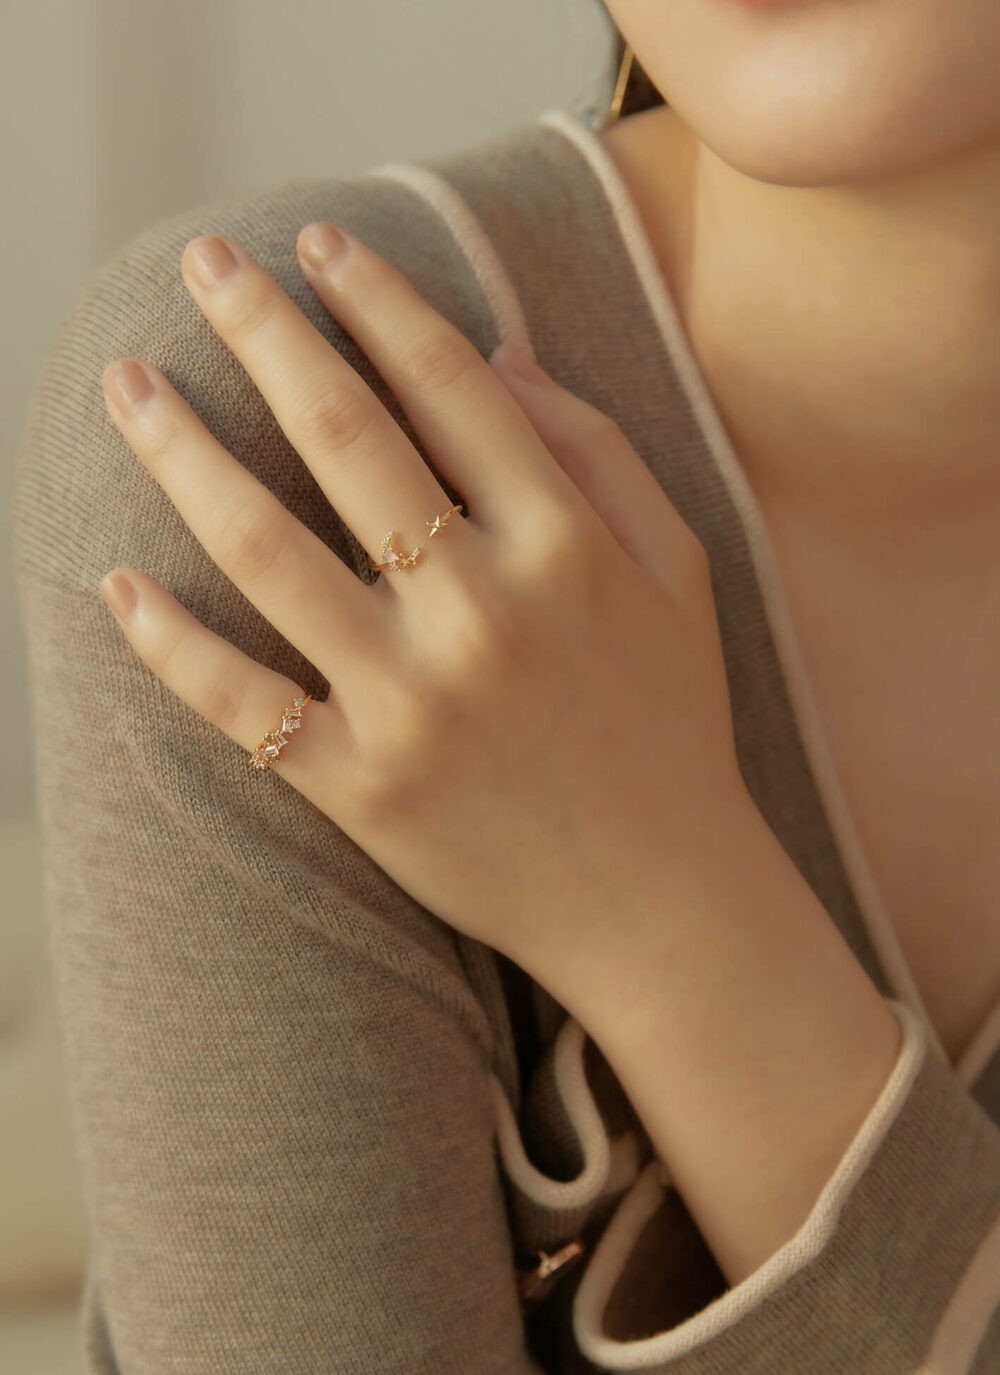 Eco安珂,韓國飾品,韓國戒指,星月戒指,小鑽戒指,開口戒指,氣質戒指